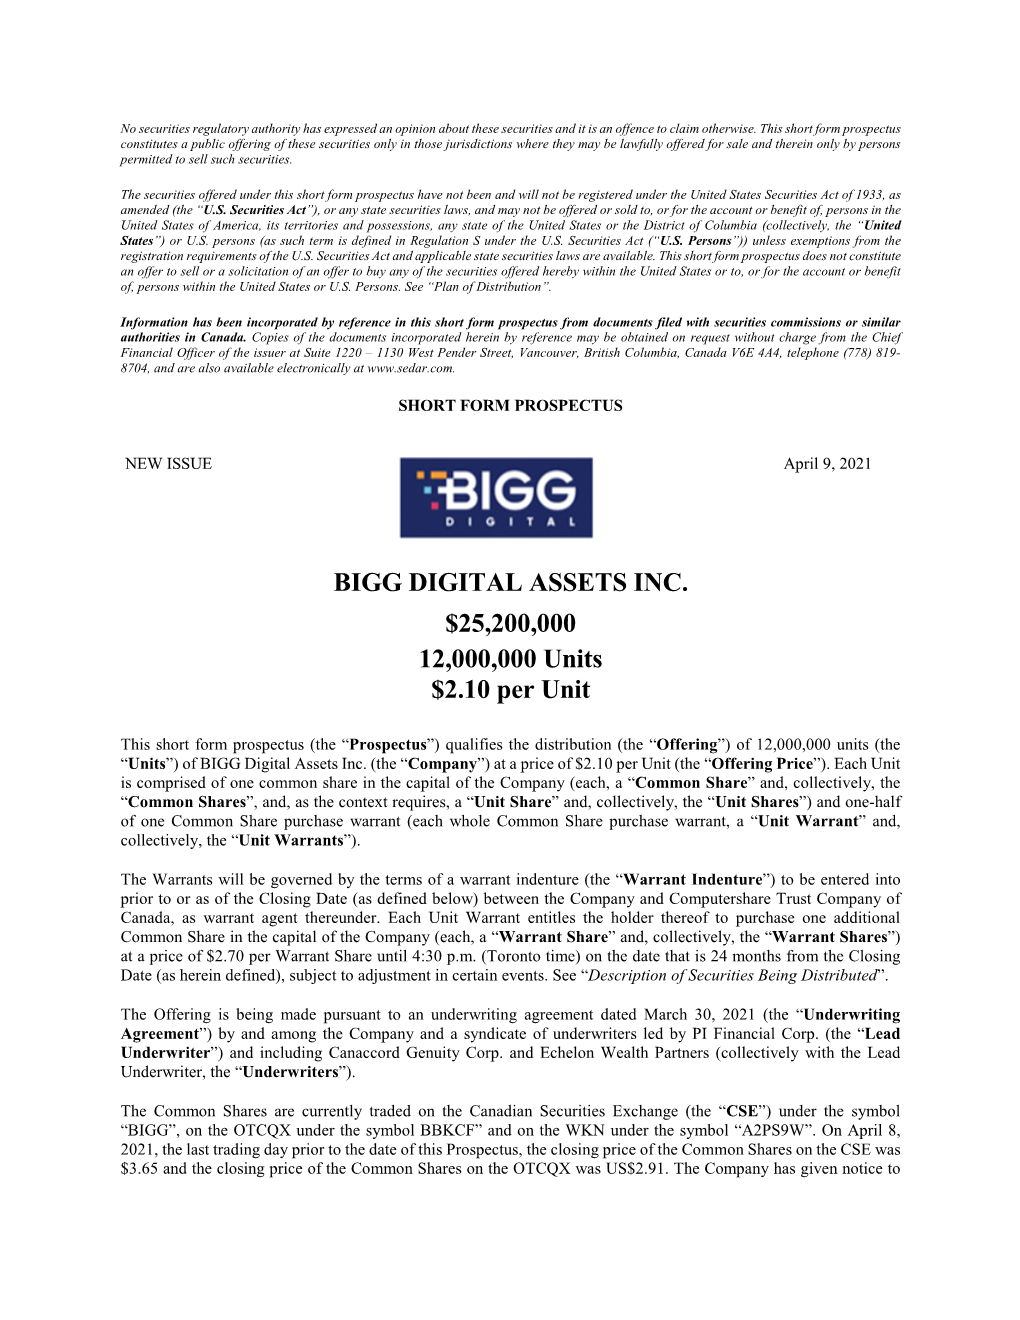 BIGG DIGITAL ASSETS INC. $25,200,000 12,000,000 Units